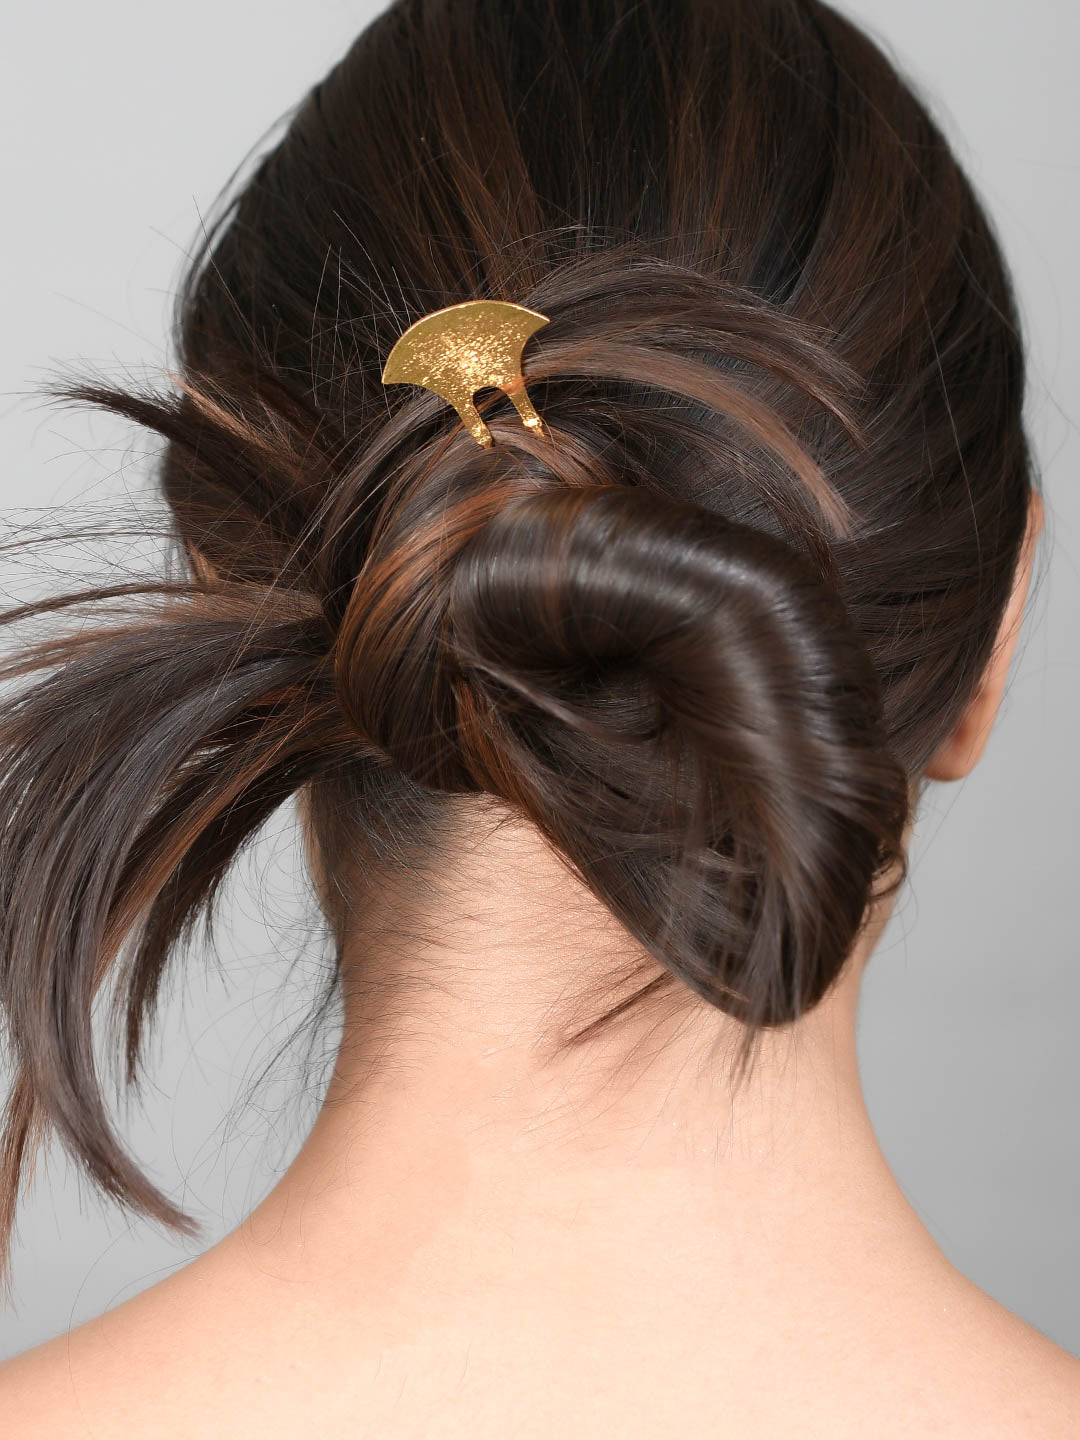 Tama Kanzashi Gold Toned Hairstick Accessory